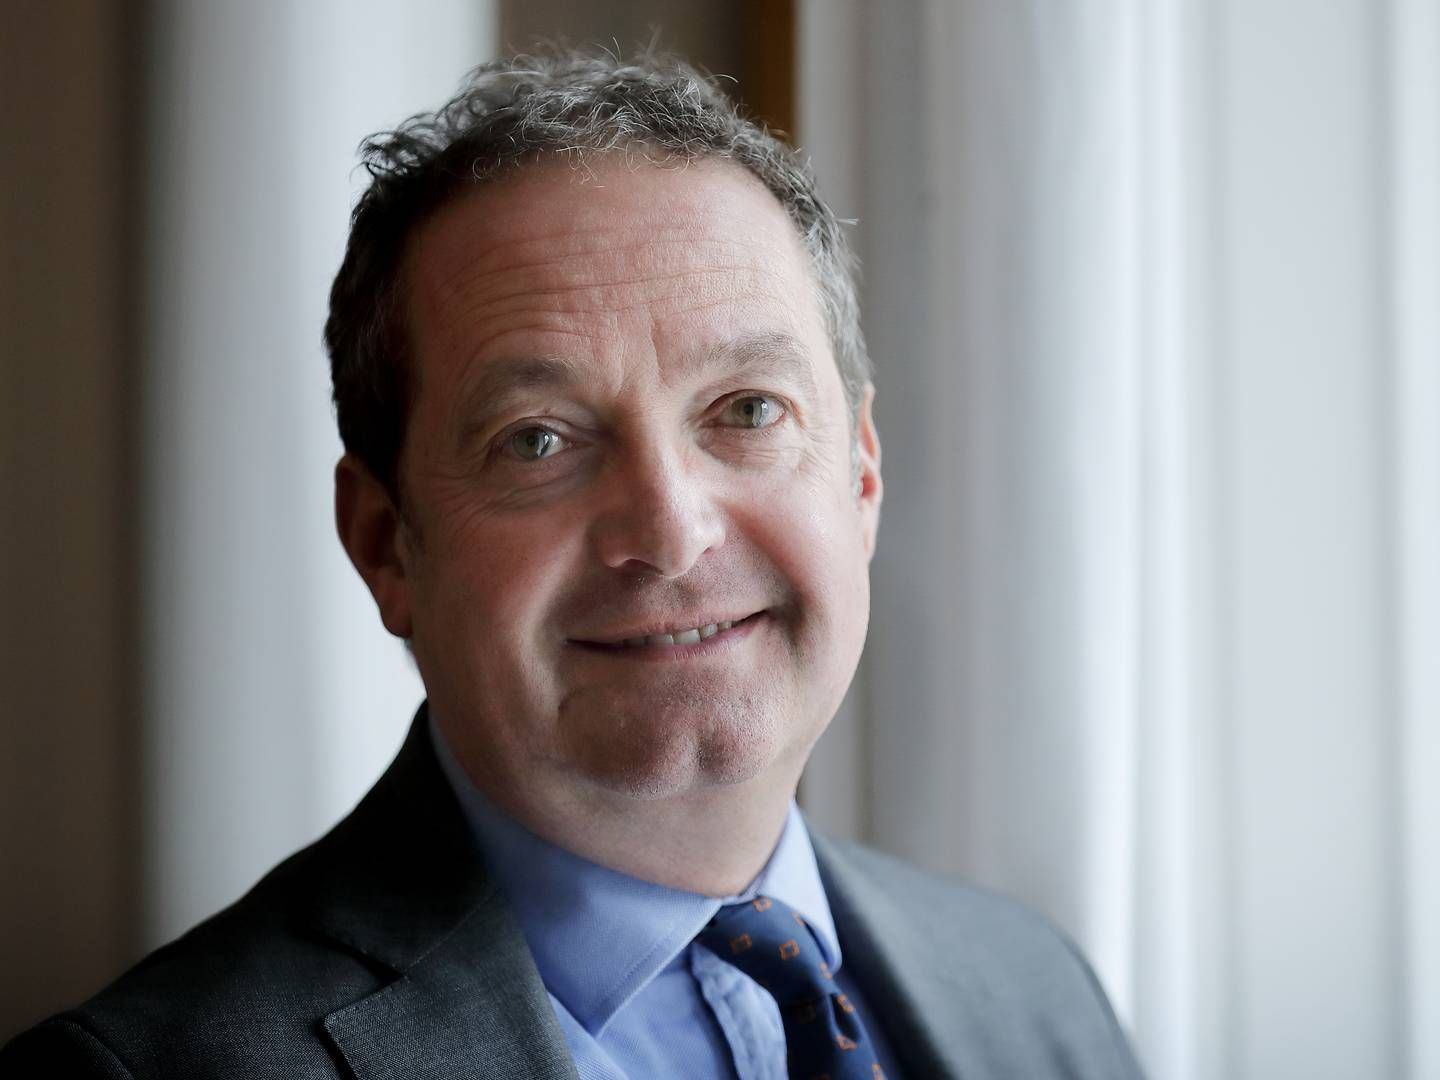 Adm. direktør i Danske Bank, Chris Vogelzang. | Foto: Jens Dresling